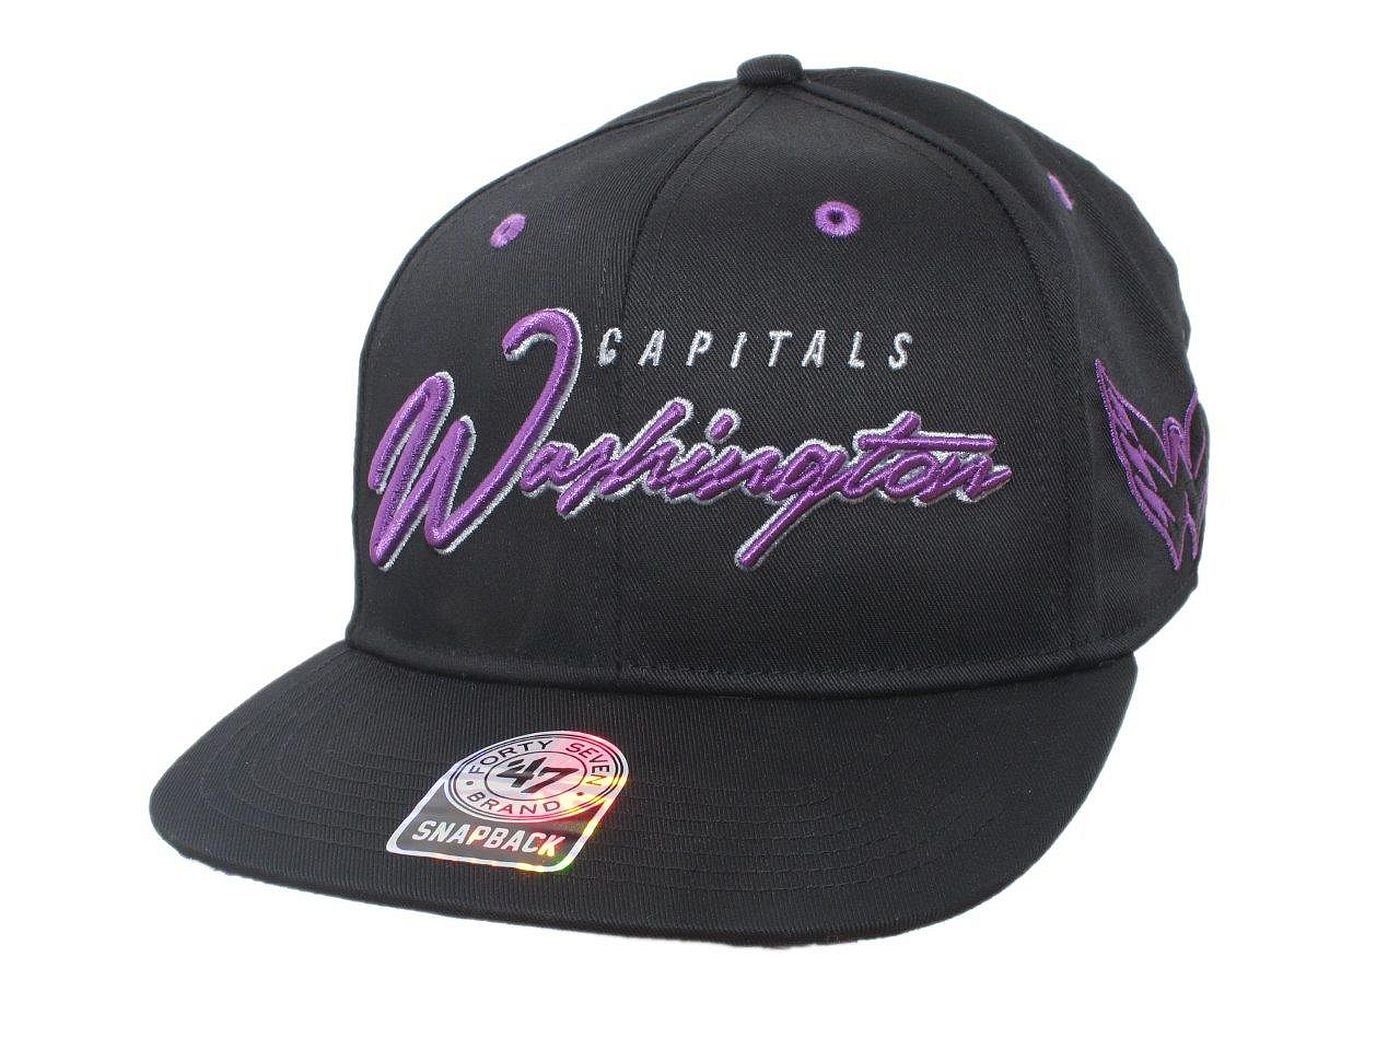 '47 Brand Baseball Cap 47 Brand - NHL Cap Basecap Kappe Mütze Eishockey "Capitals